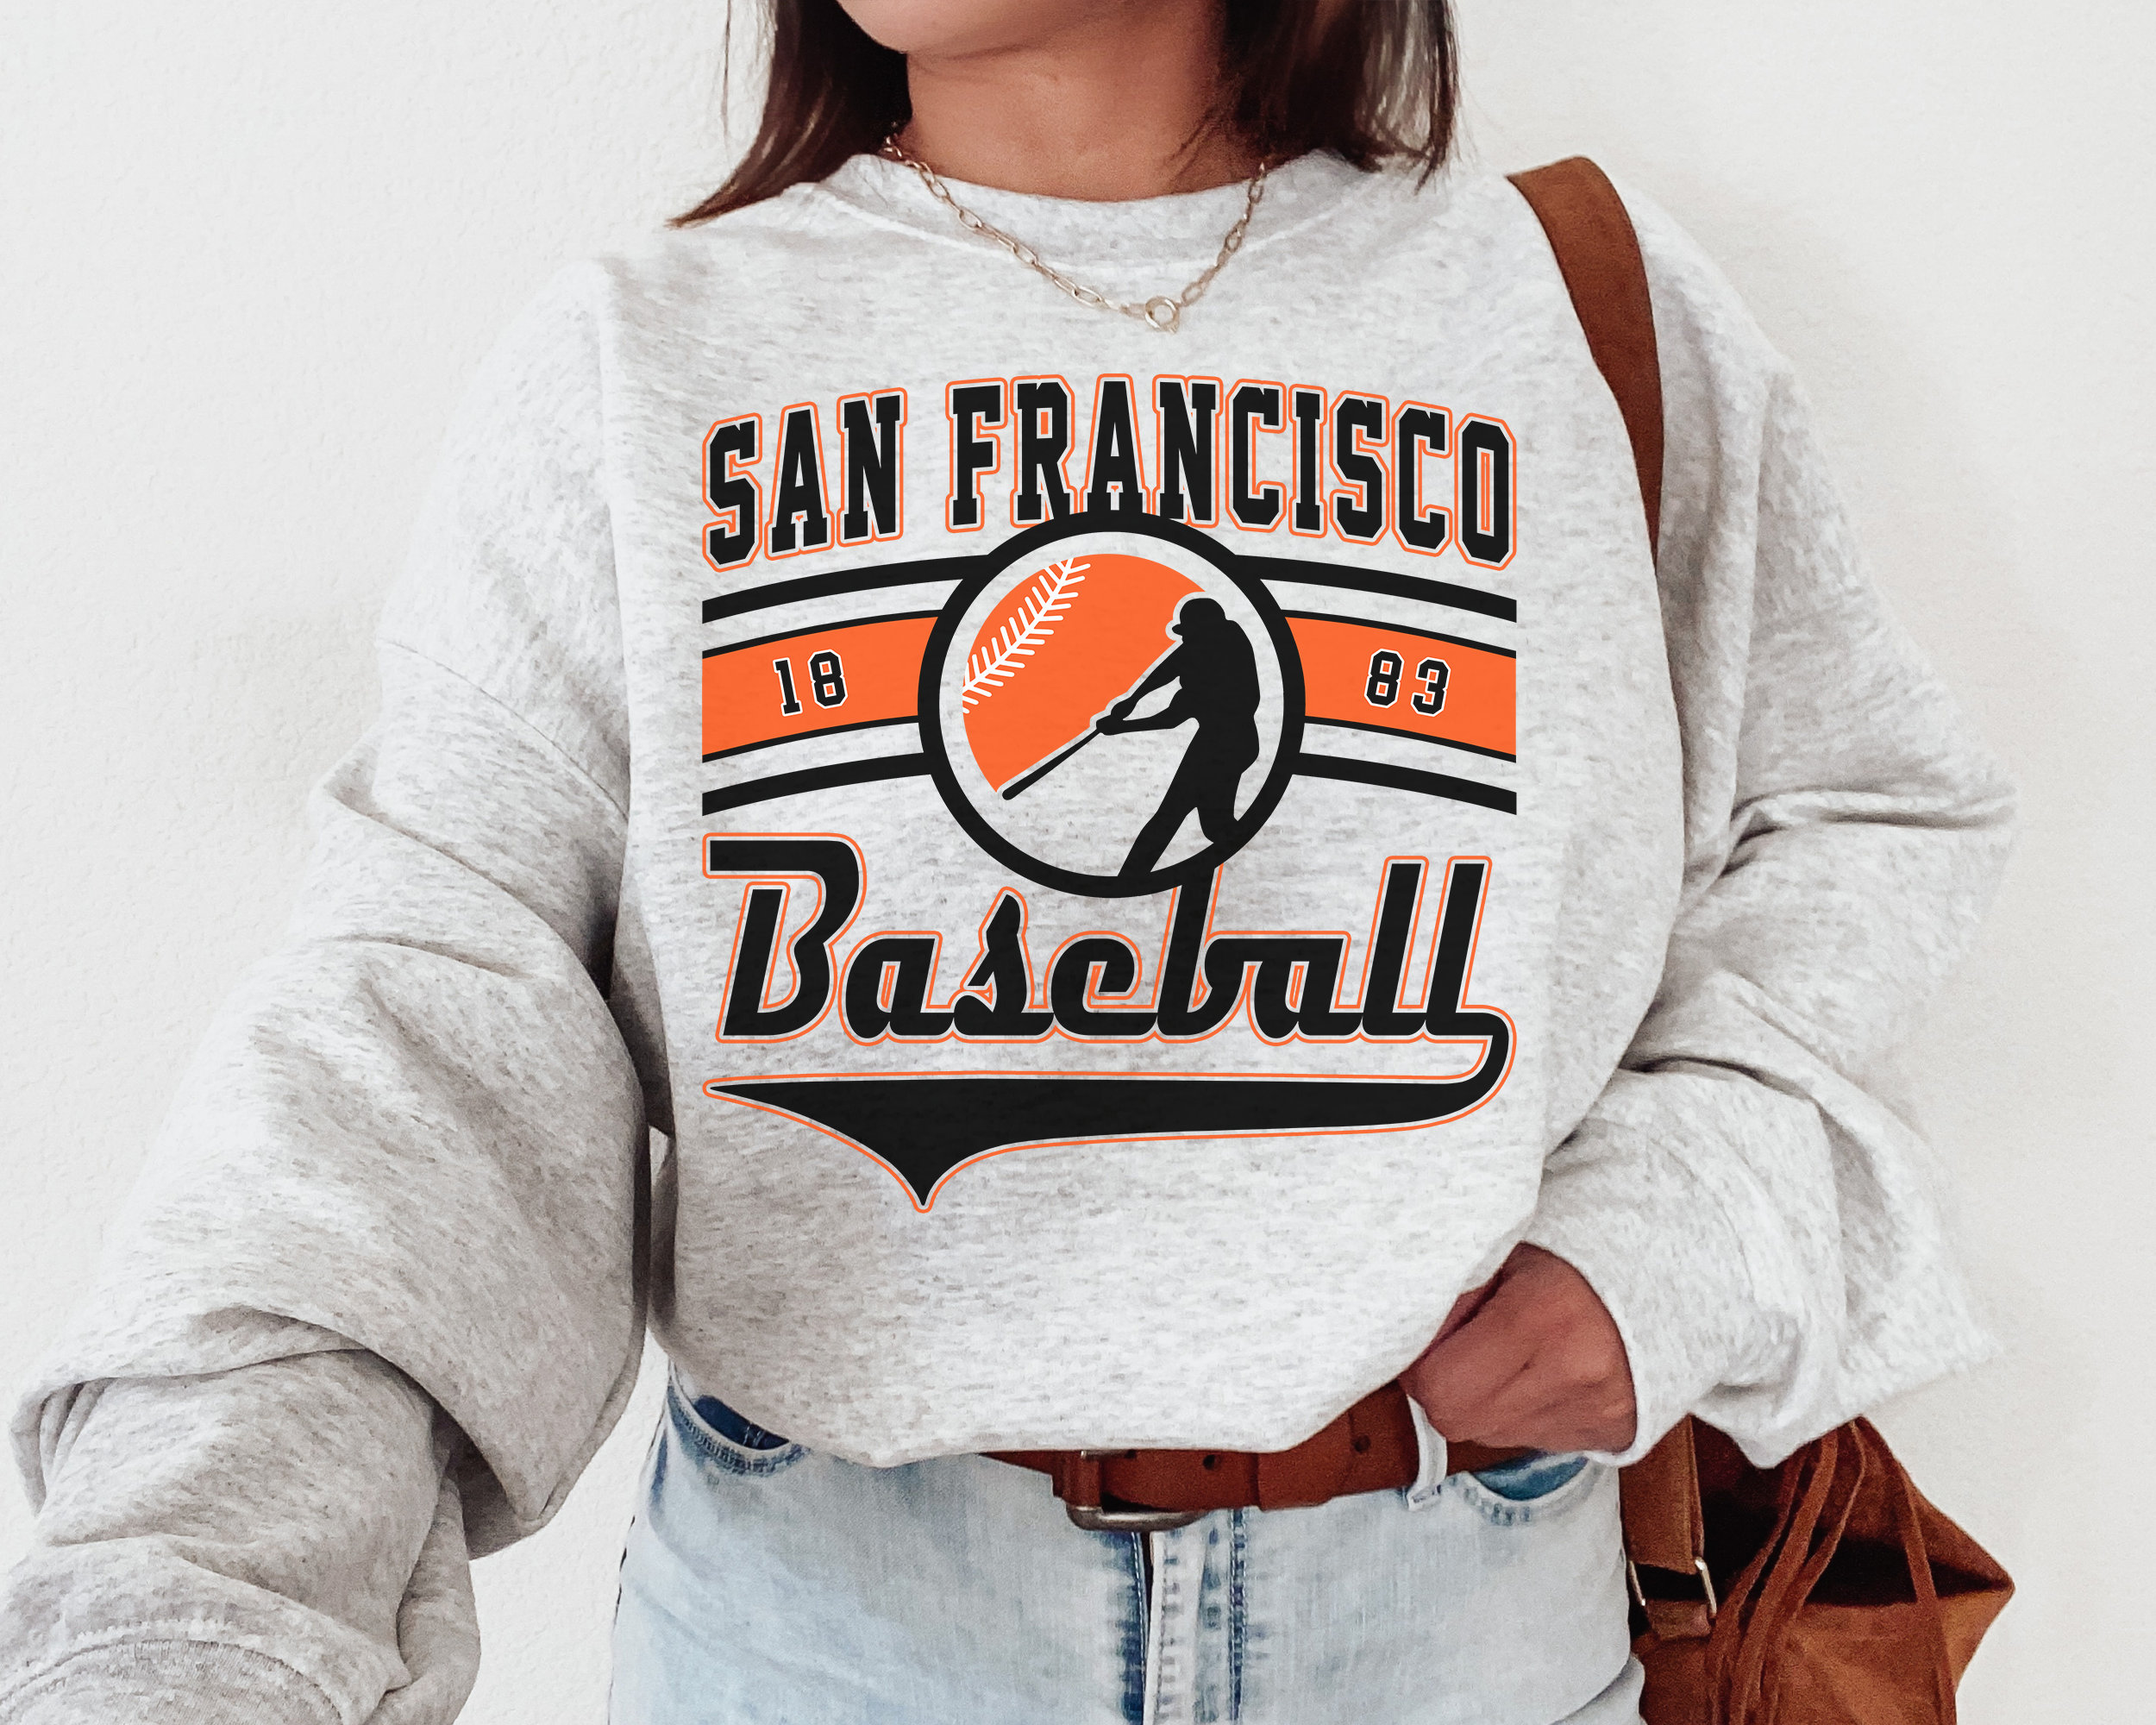 San Francisco Giants Iconic Secondary Colour Logo Graphic T-Shirt - Mens